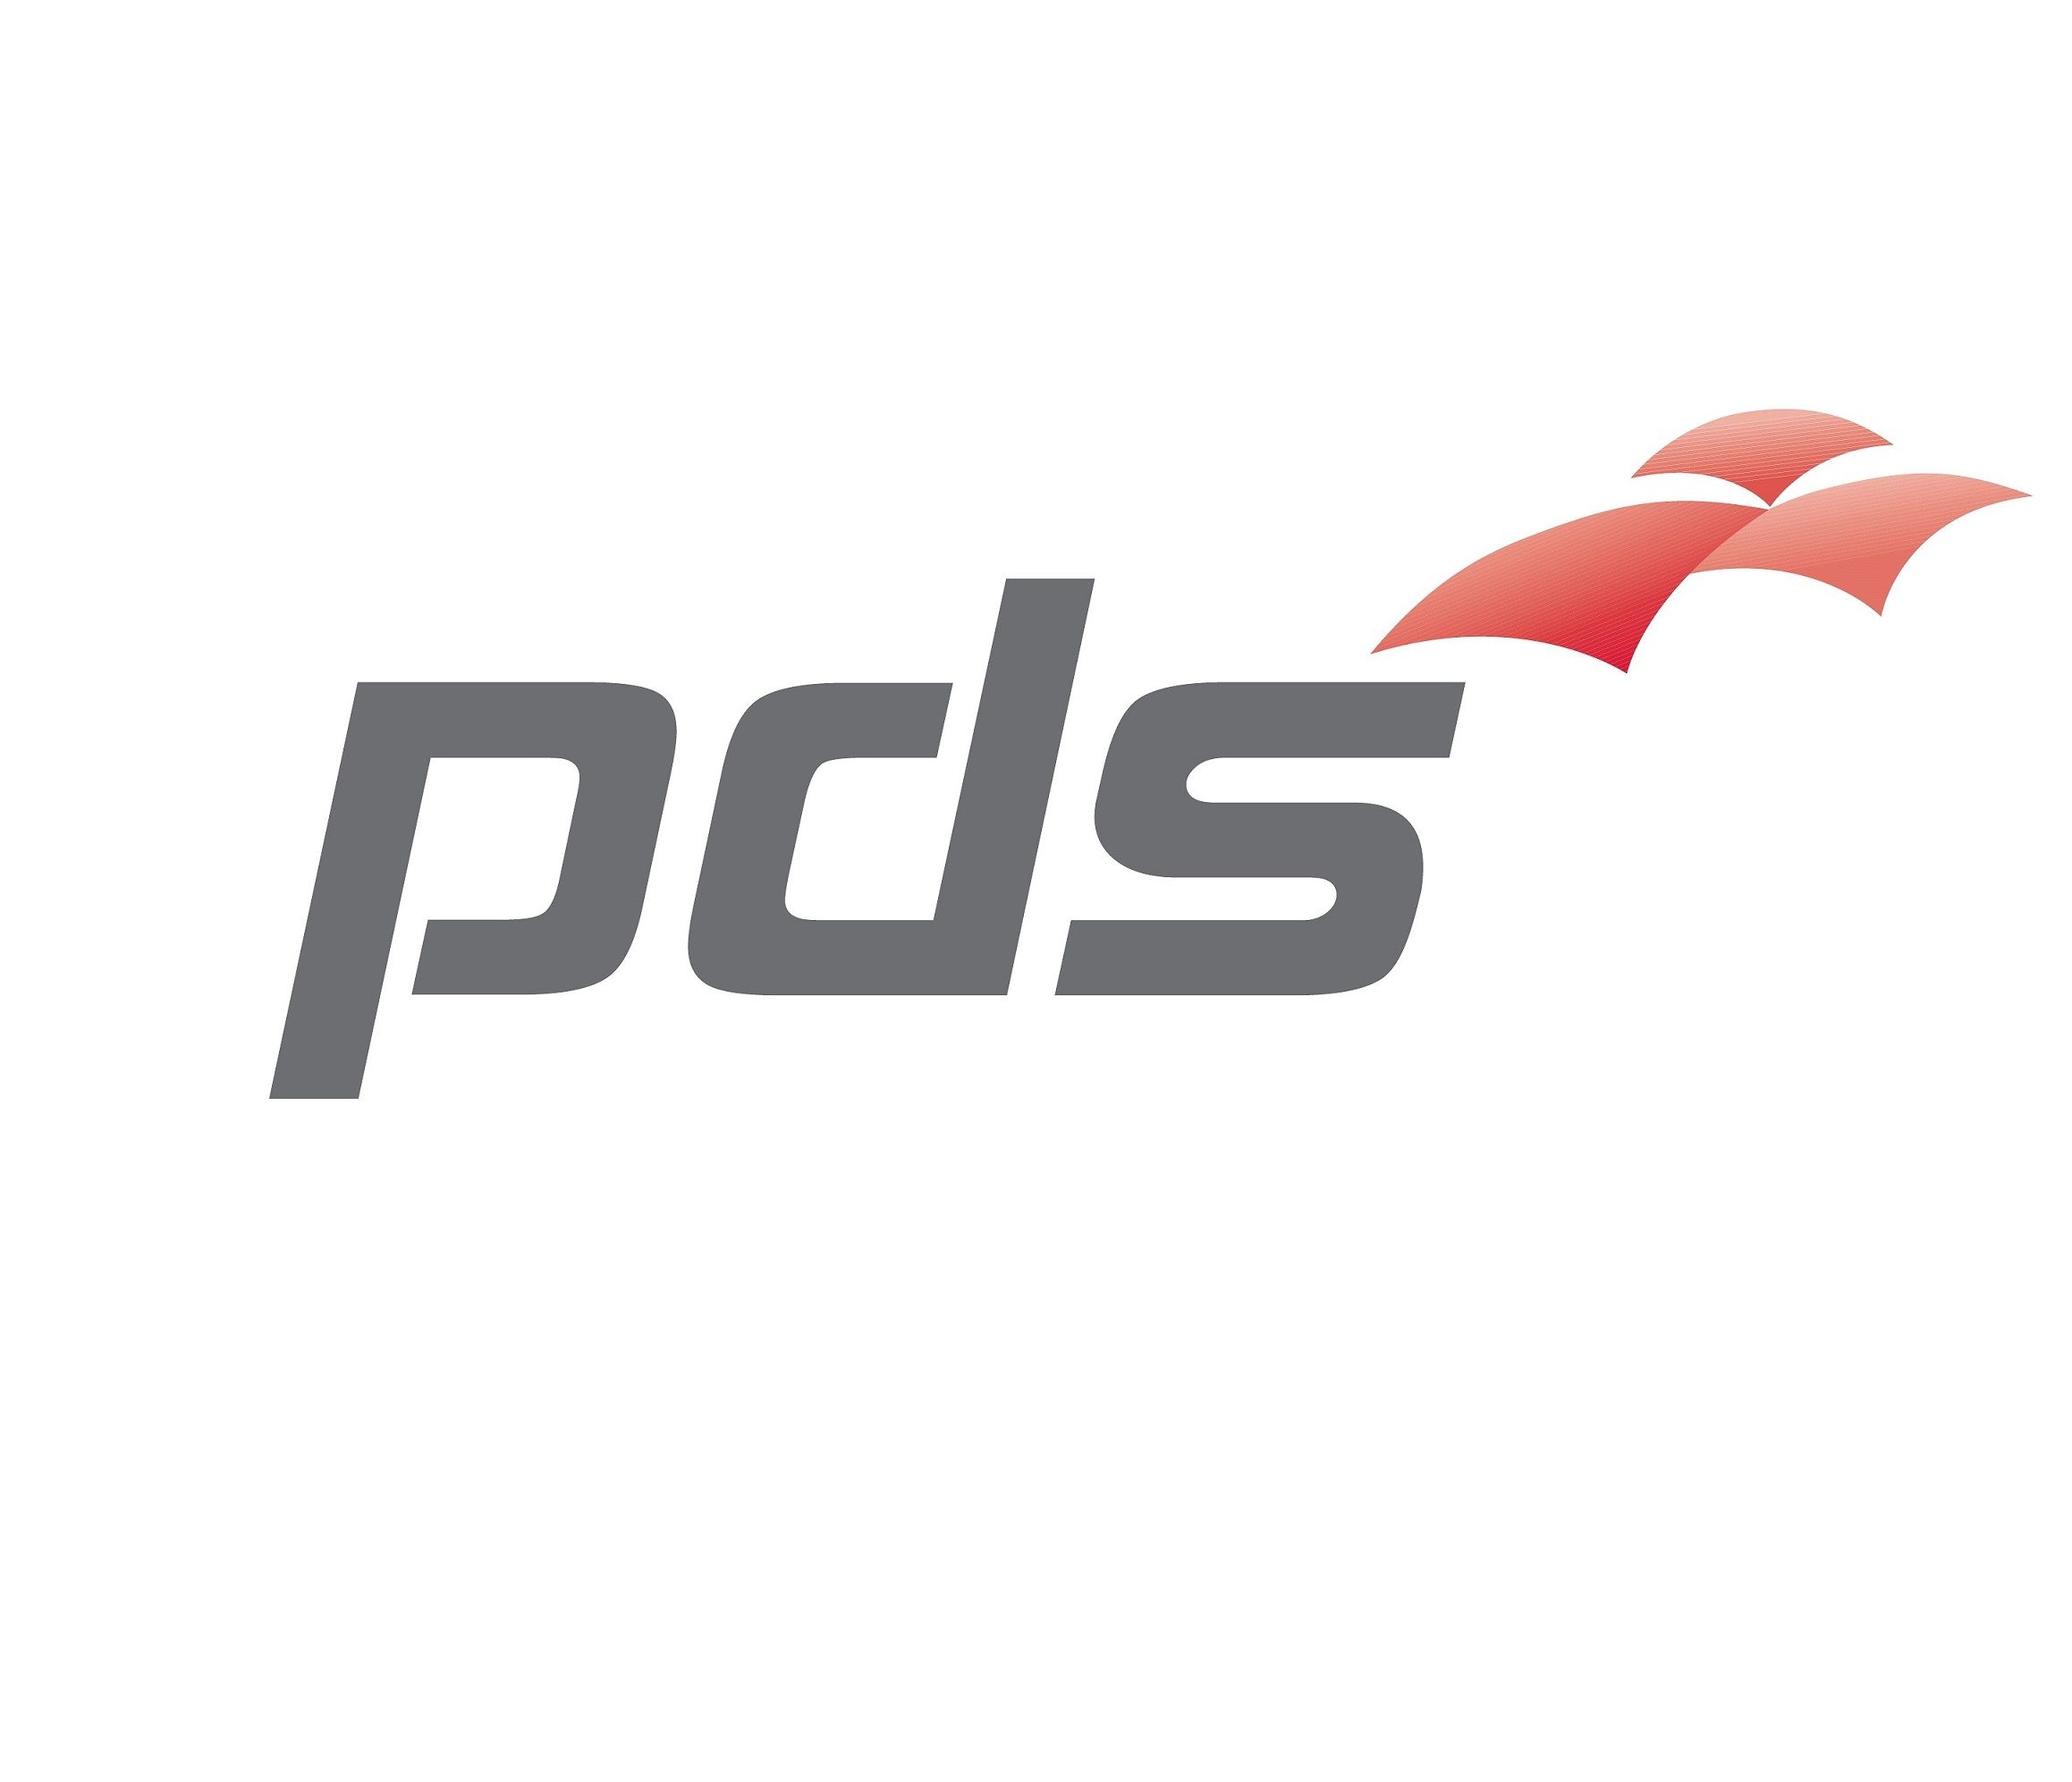 Pds International Pte Ltd